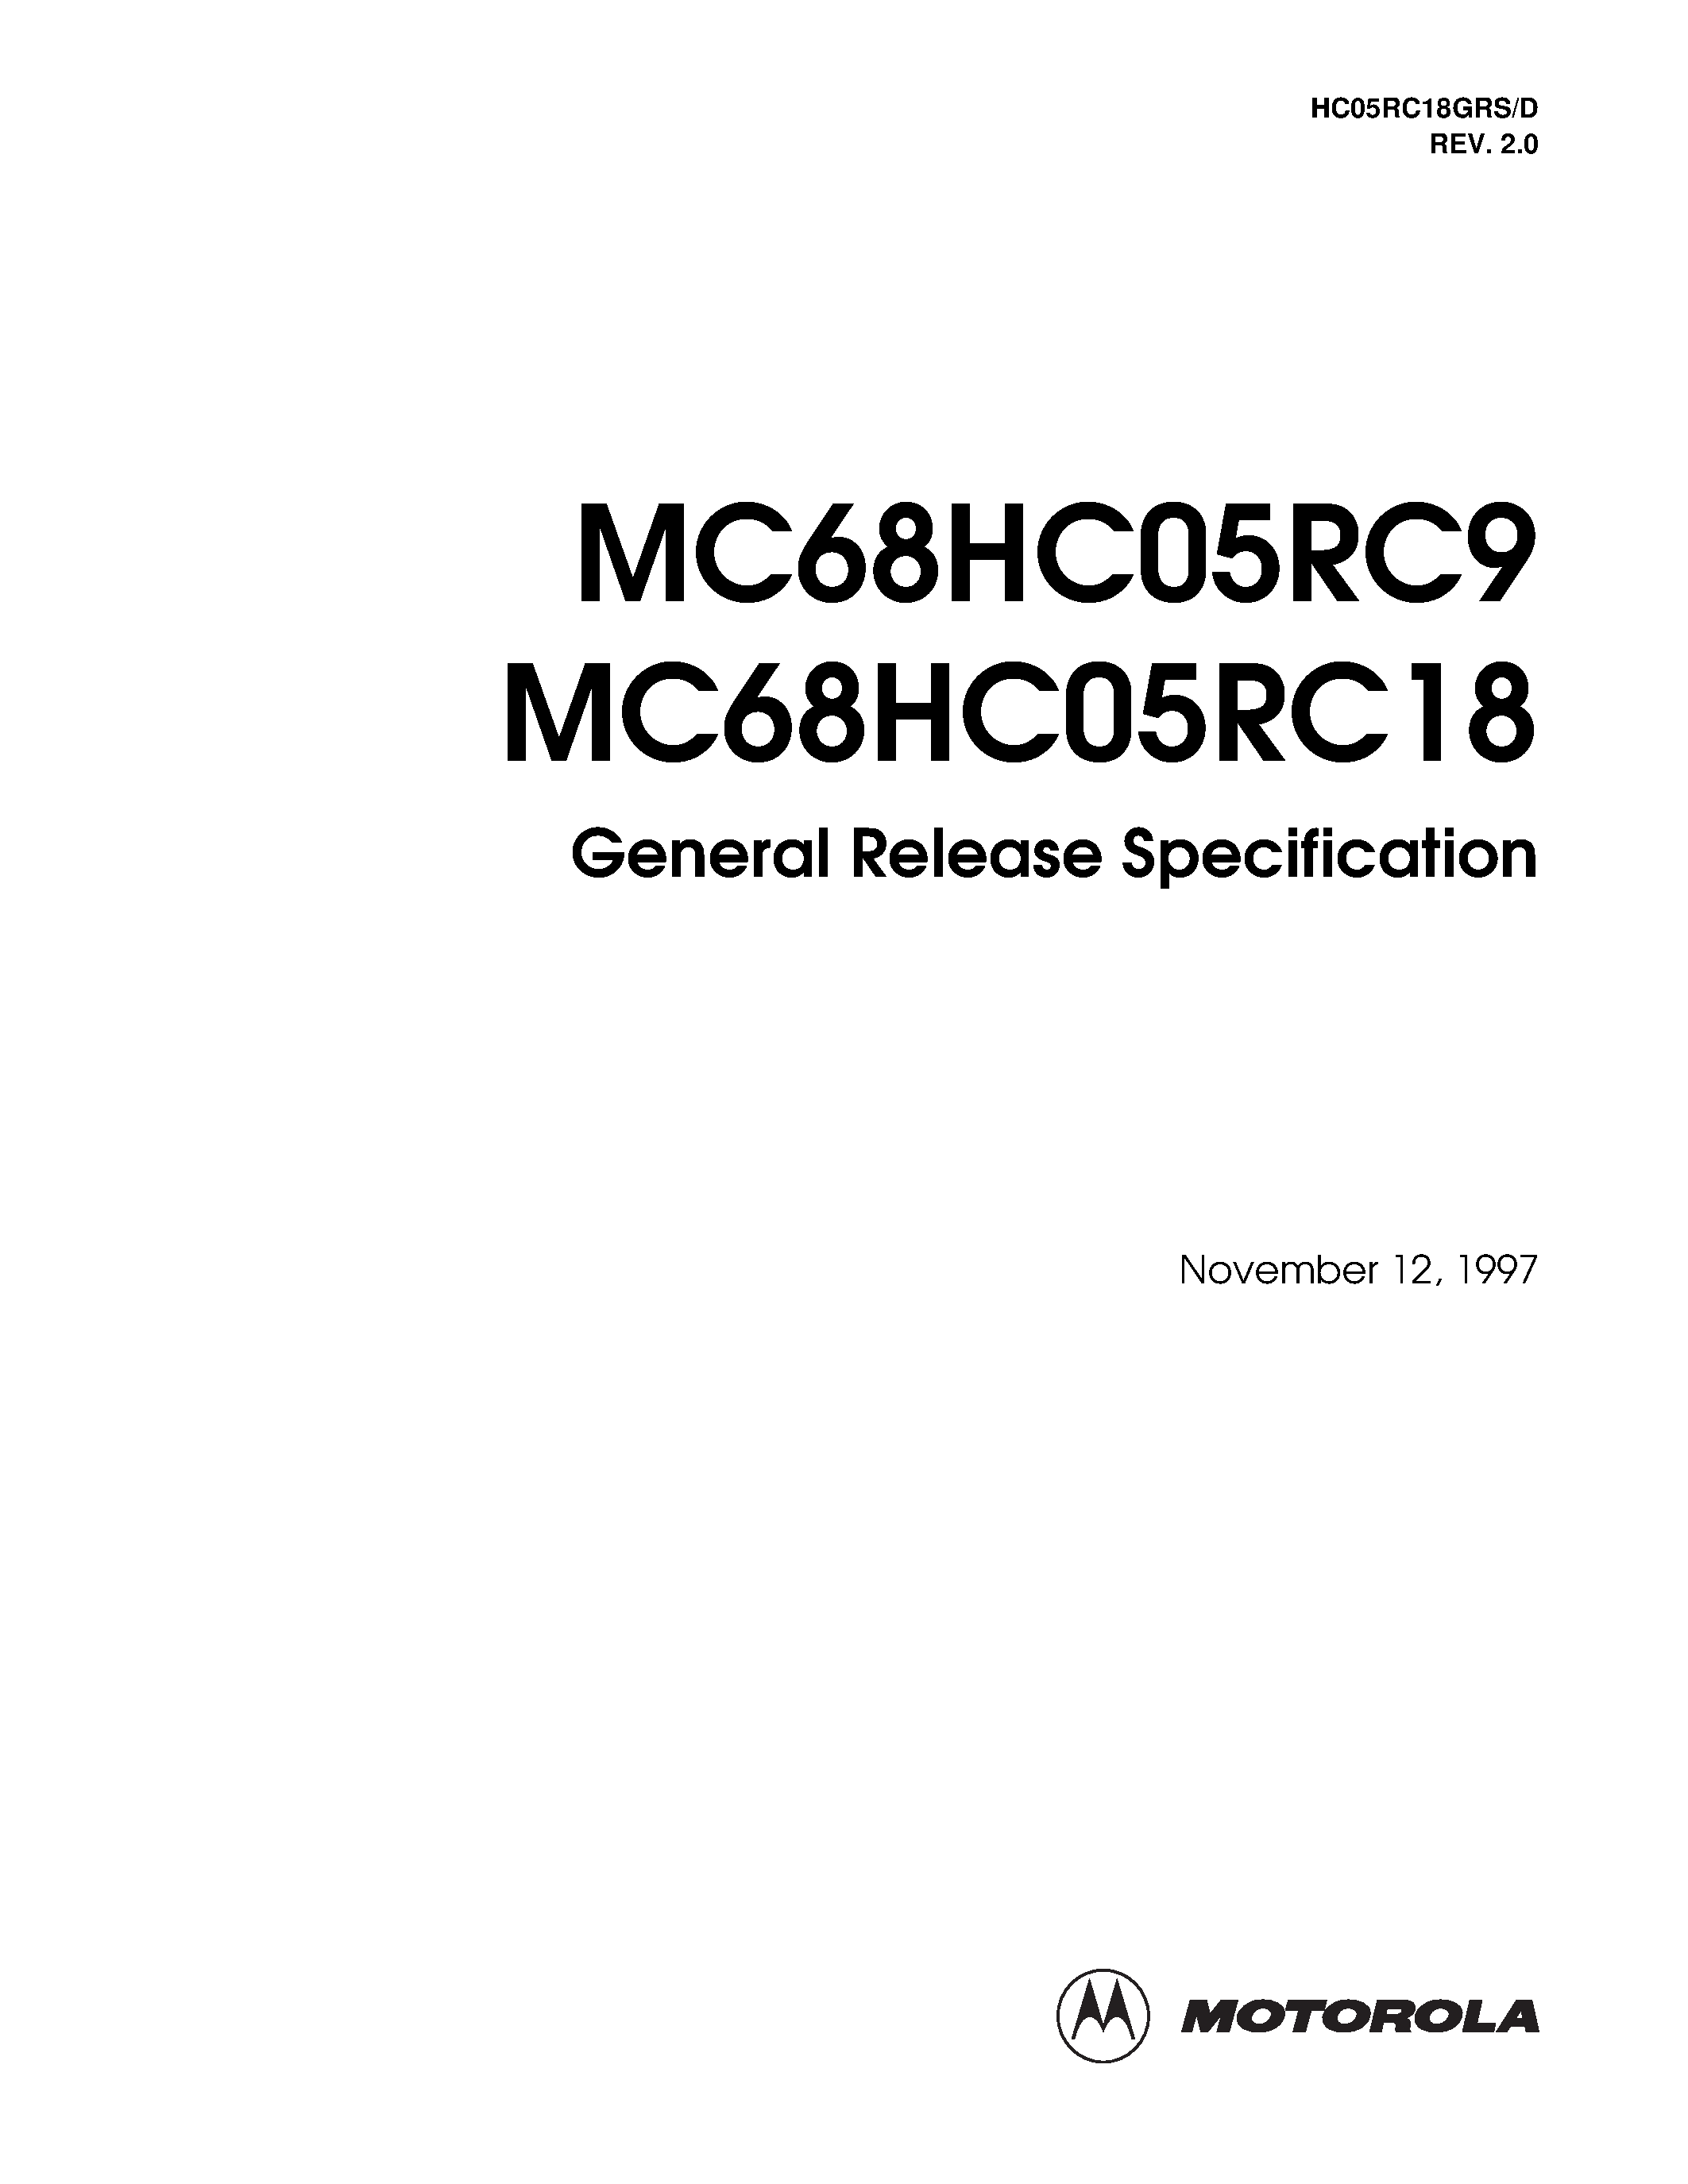 Datasheet MC68HC05RC18 - (MC68HC05RC9 / MC68HC05RC18) Microcontroller page 1